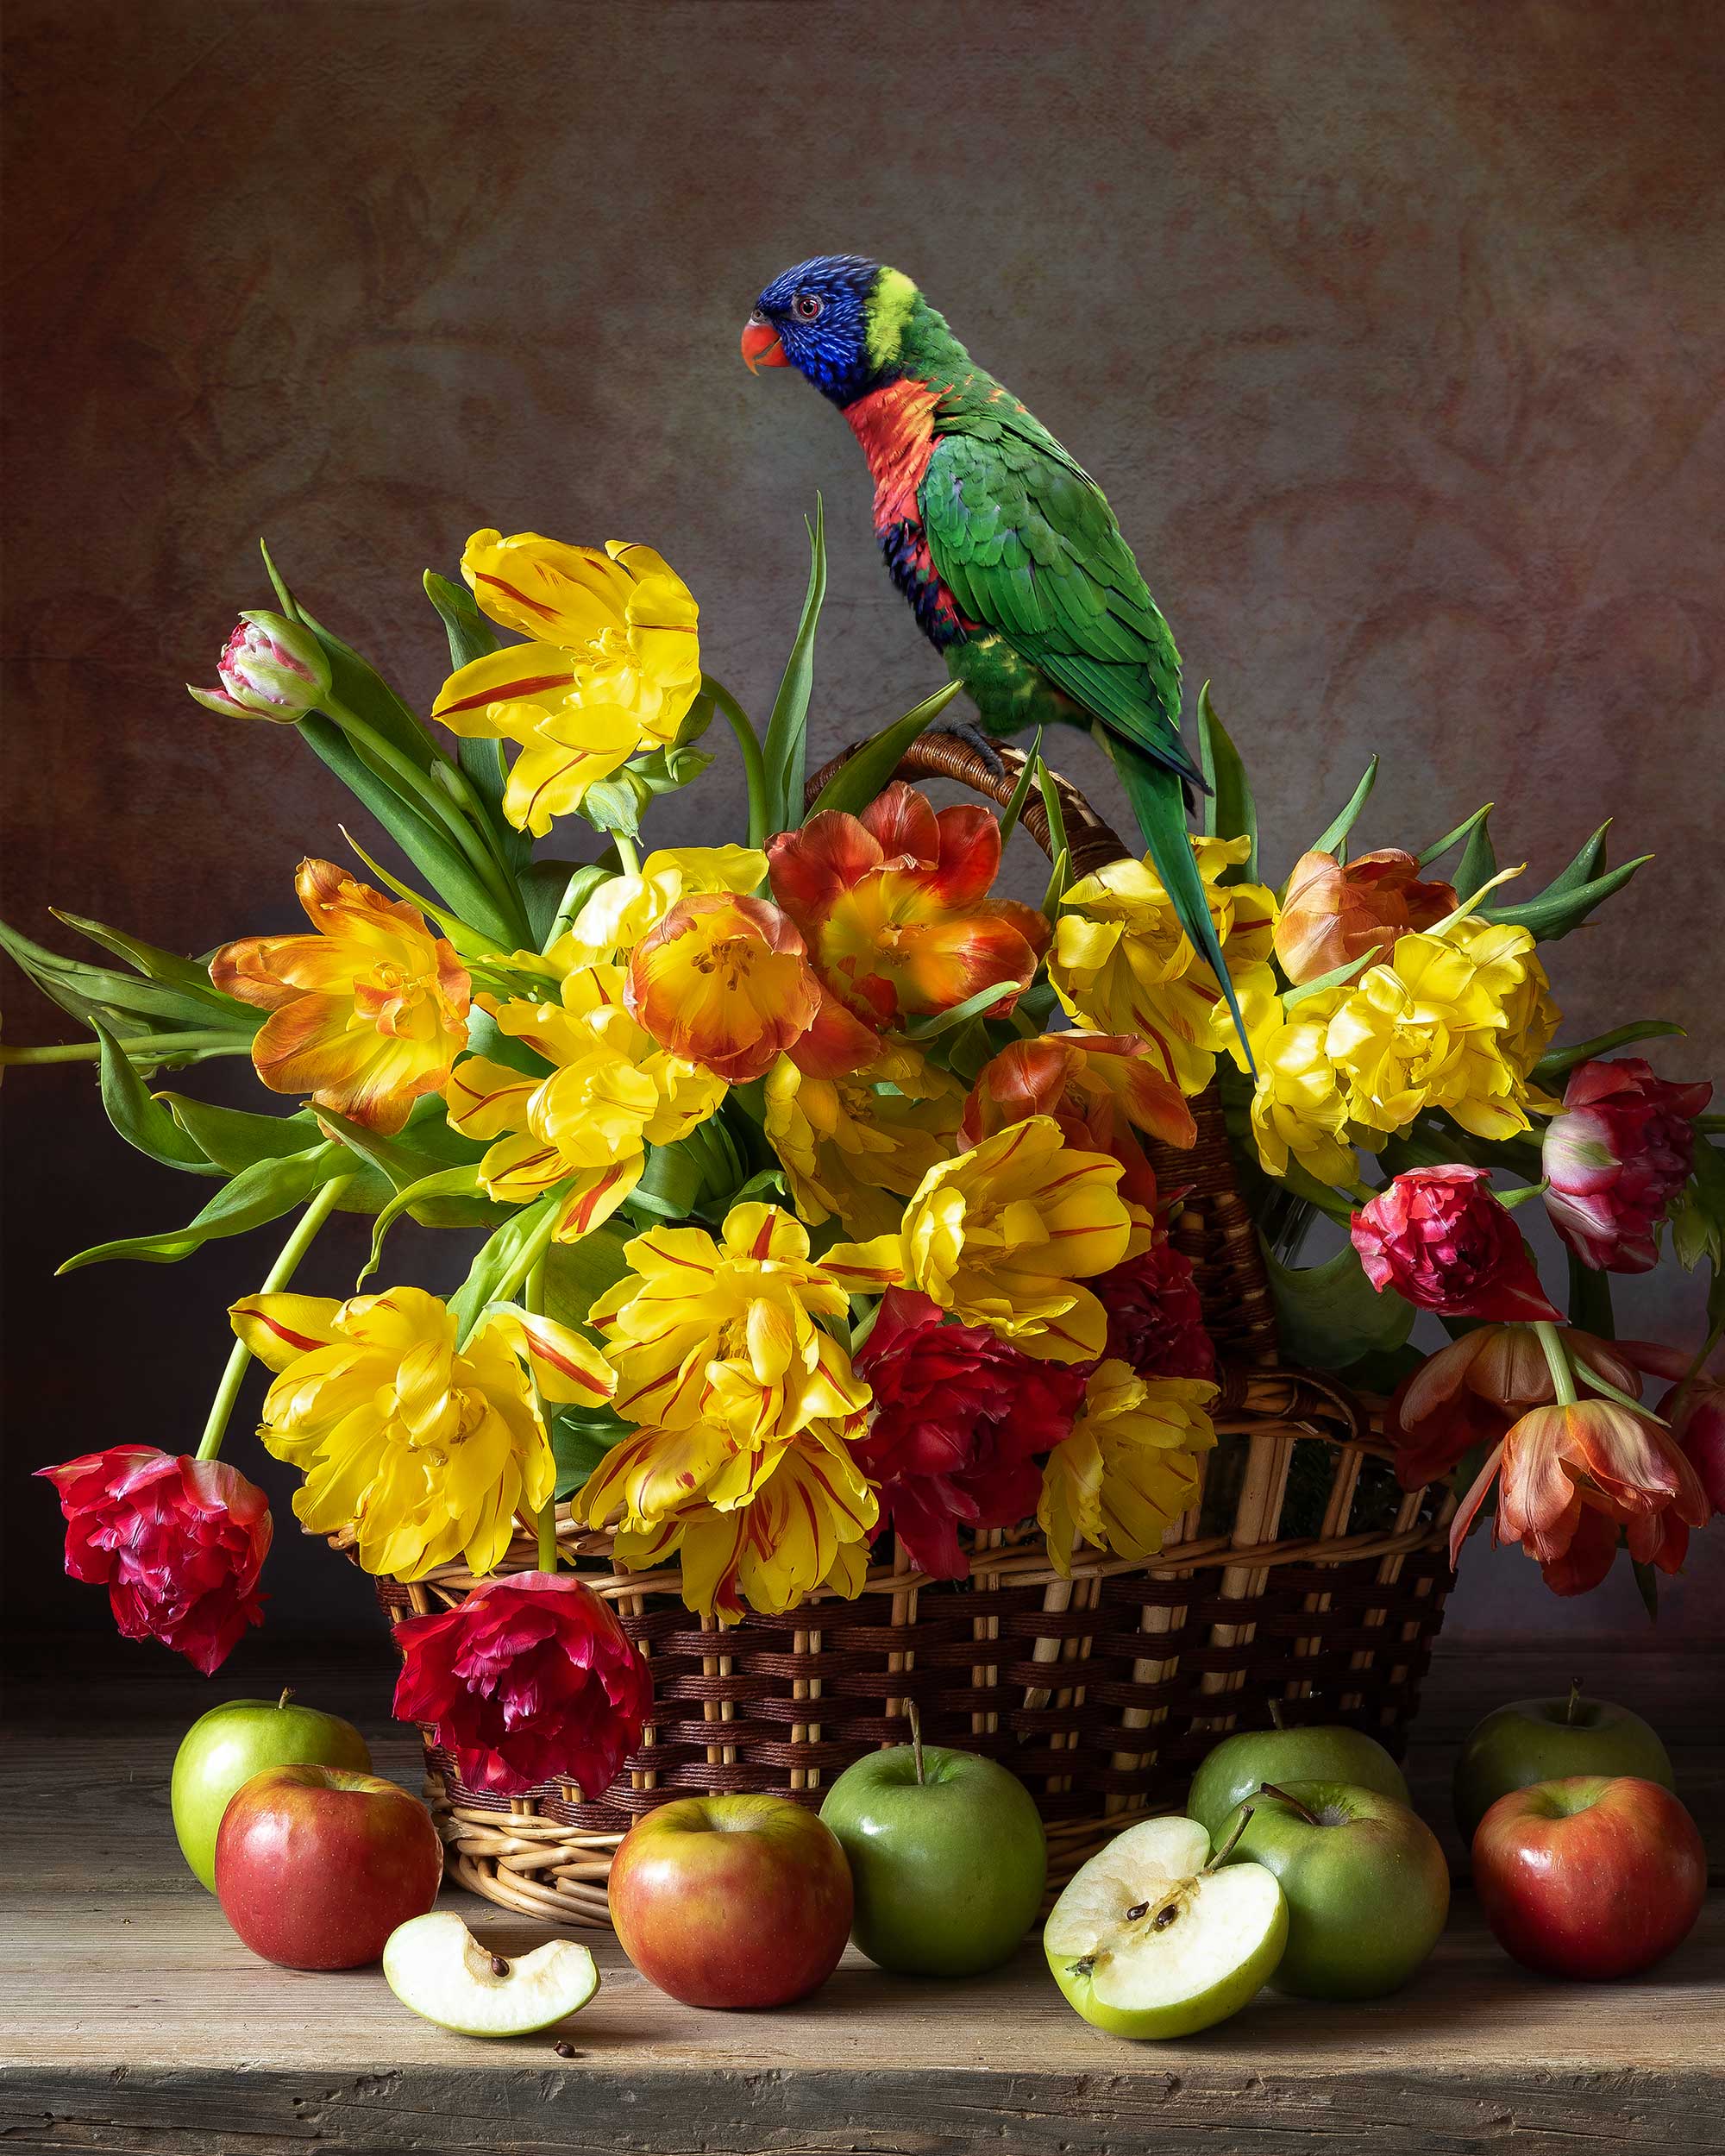 parrot, tulips, still life photography, flowers, Слуцкая Яна